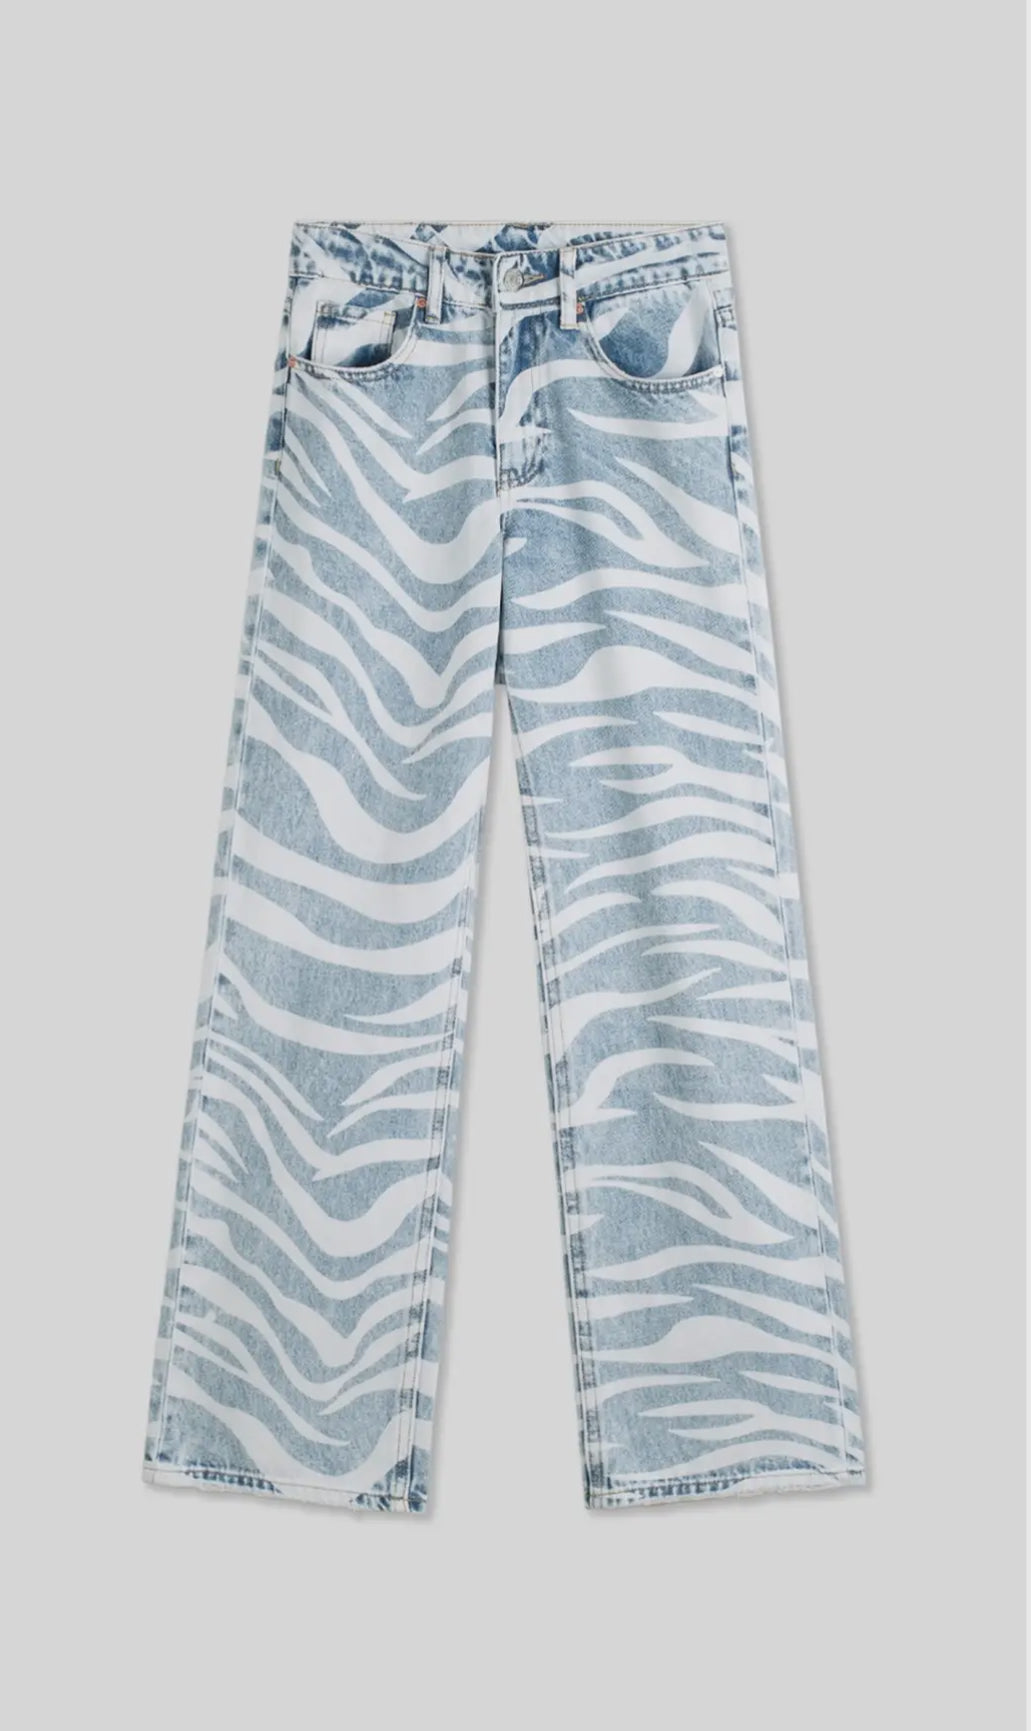 Zebra mom jeans mid rise